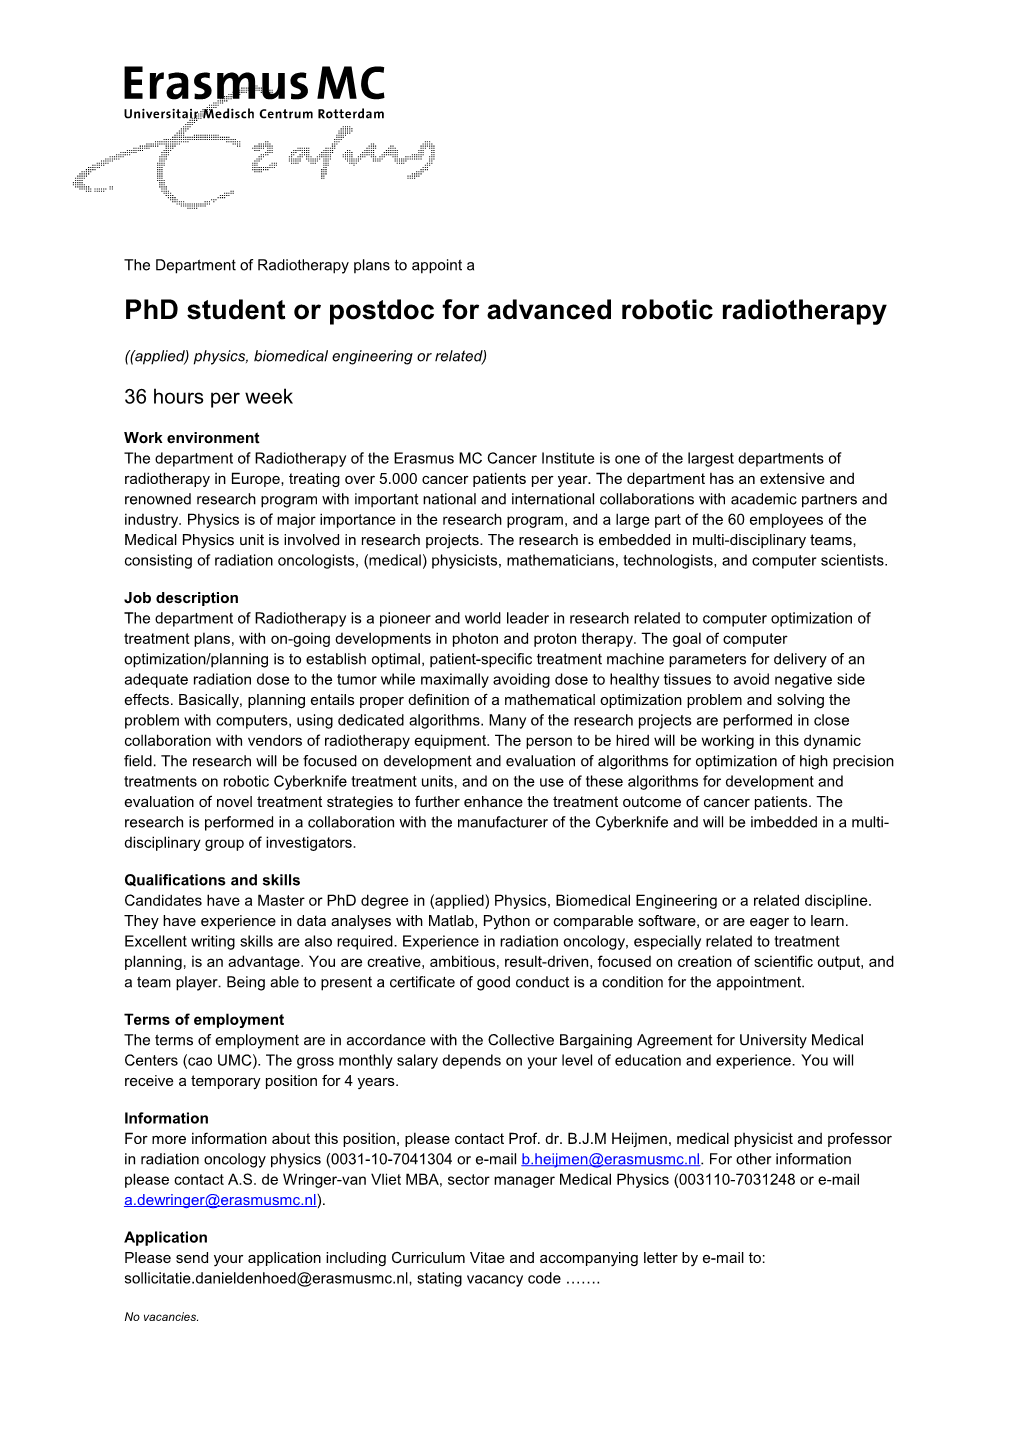 Phd Student Or Postdocfor Advanced Robotic Radiotherapy